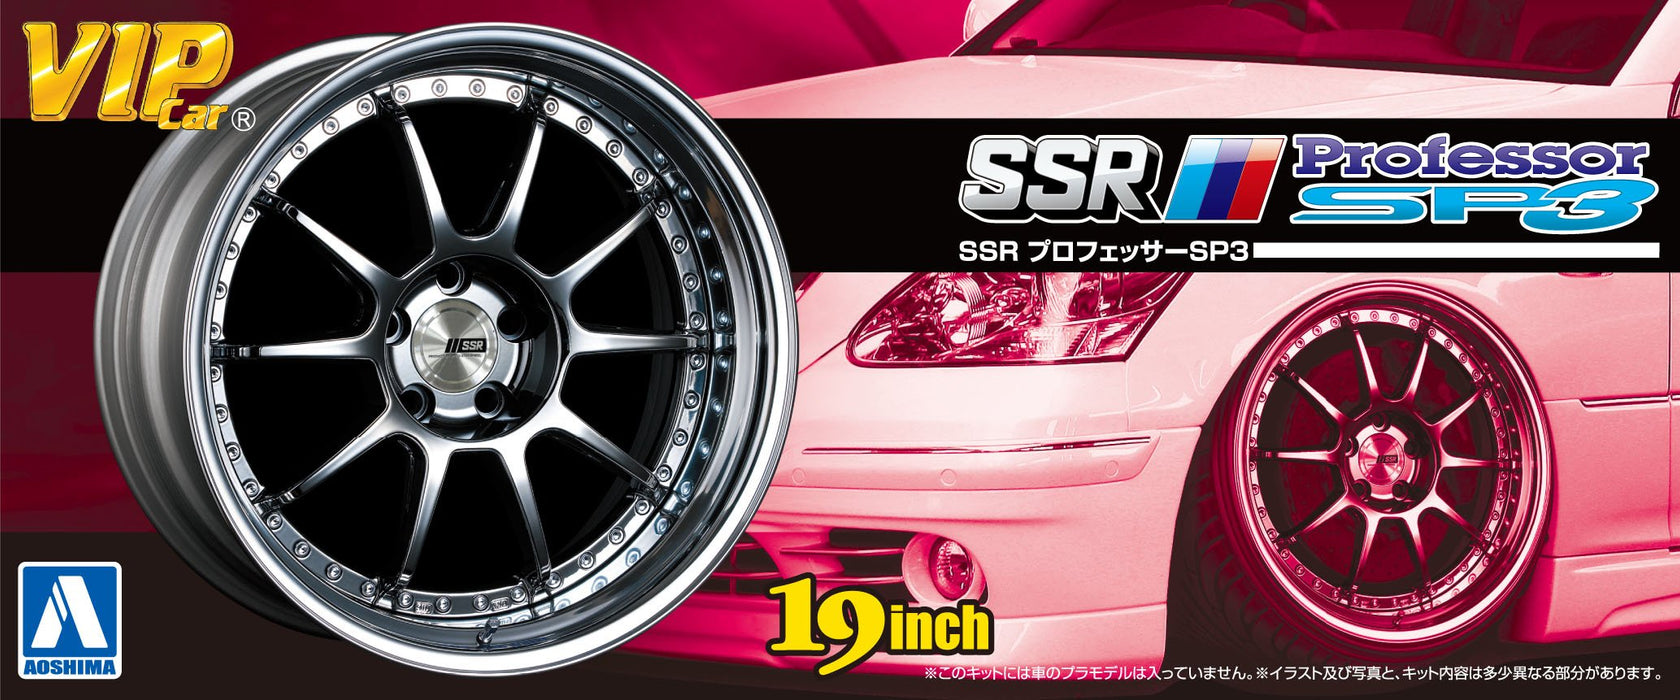 AOSHIMA 09192 Vip Car Tire & Wheel Set Ssr Professor Sp3 19 Inch 1/24 Scale Kit